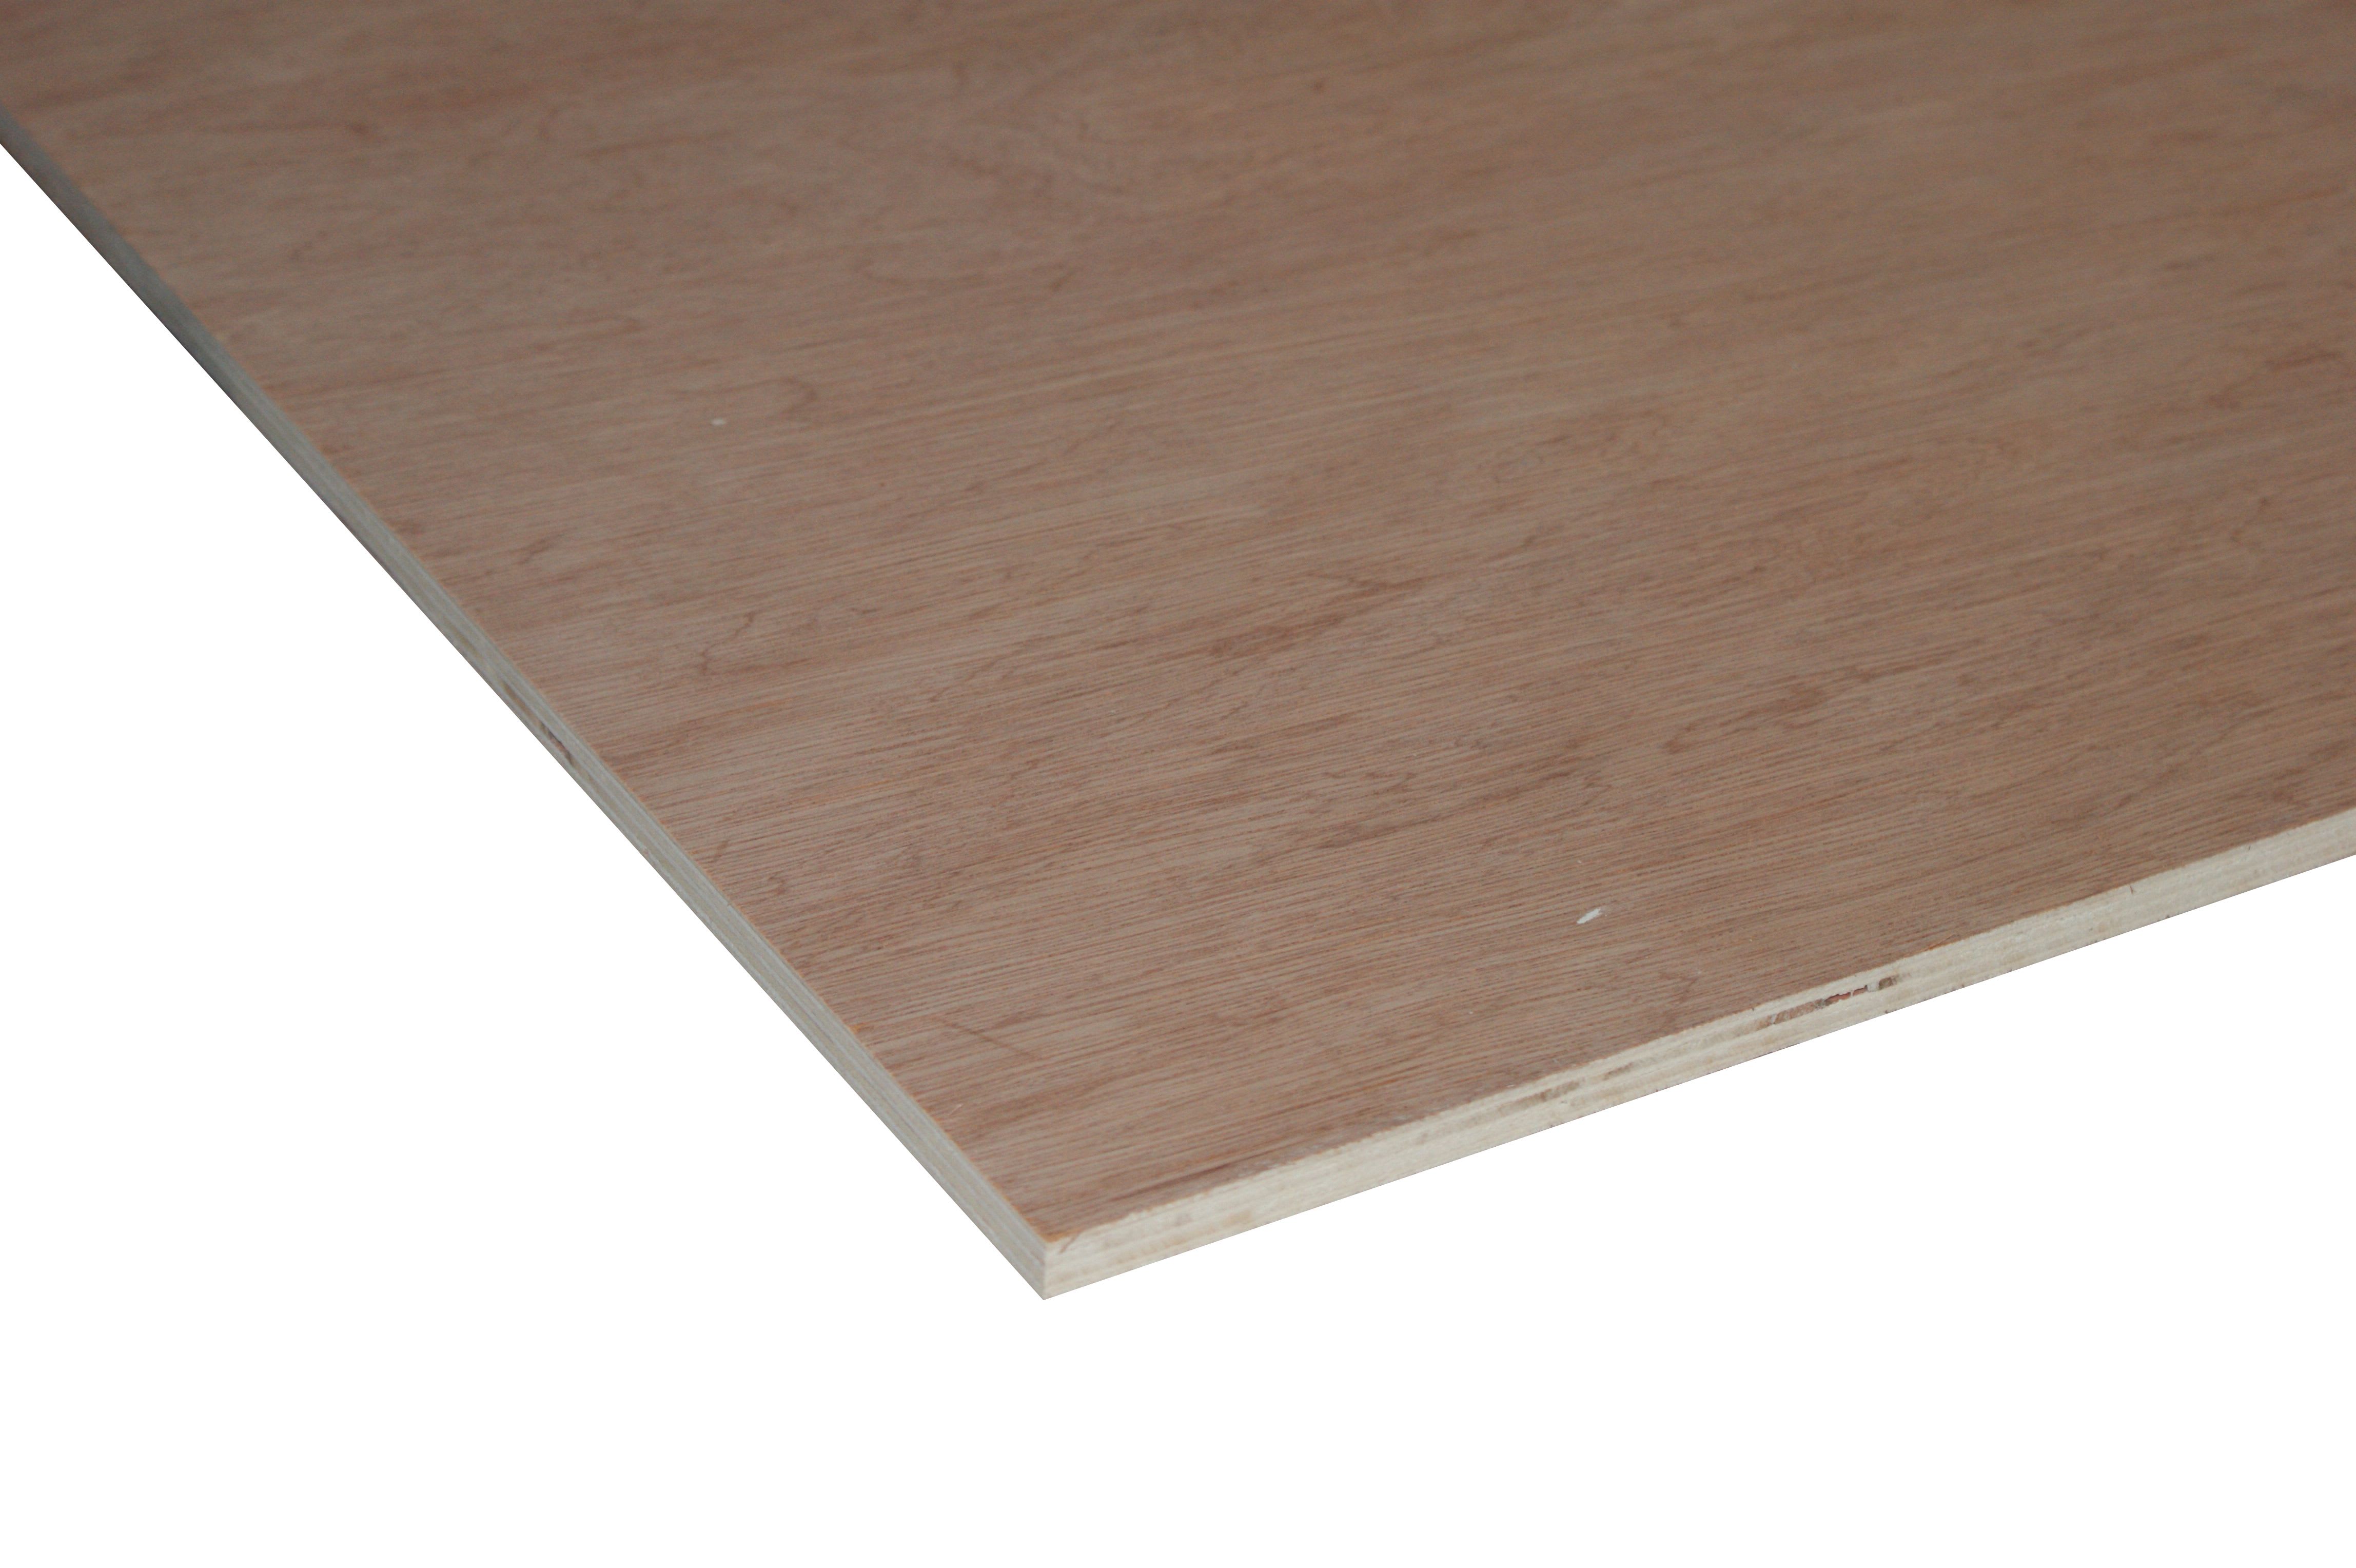 Non-Structural Hardwood Plywood Sheet - 12 x 1220